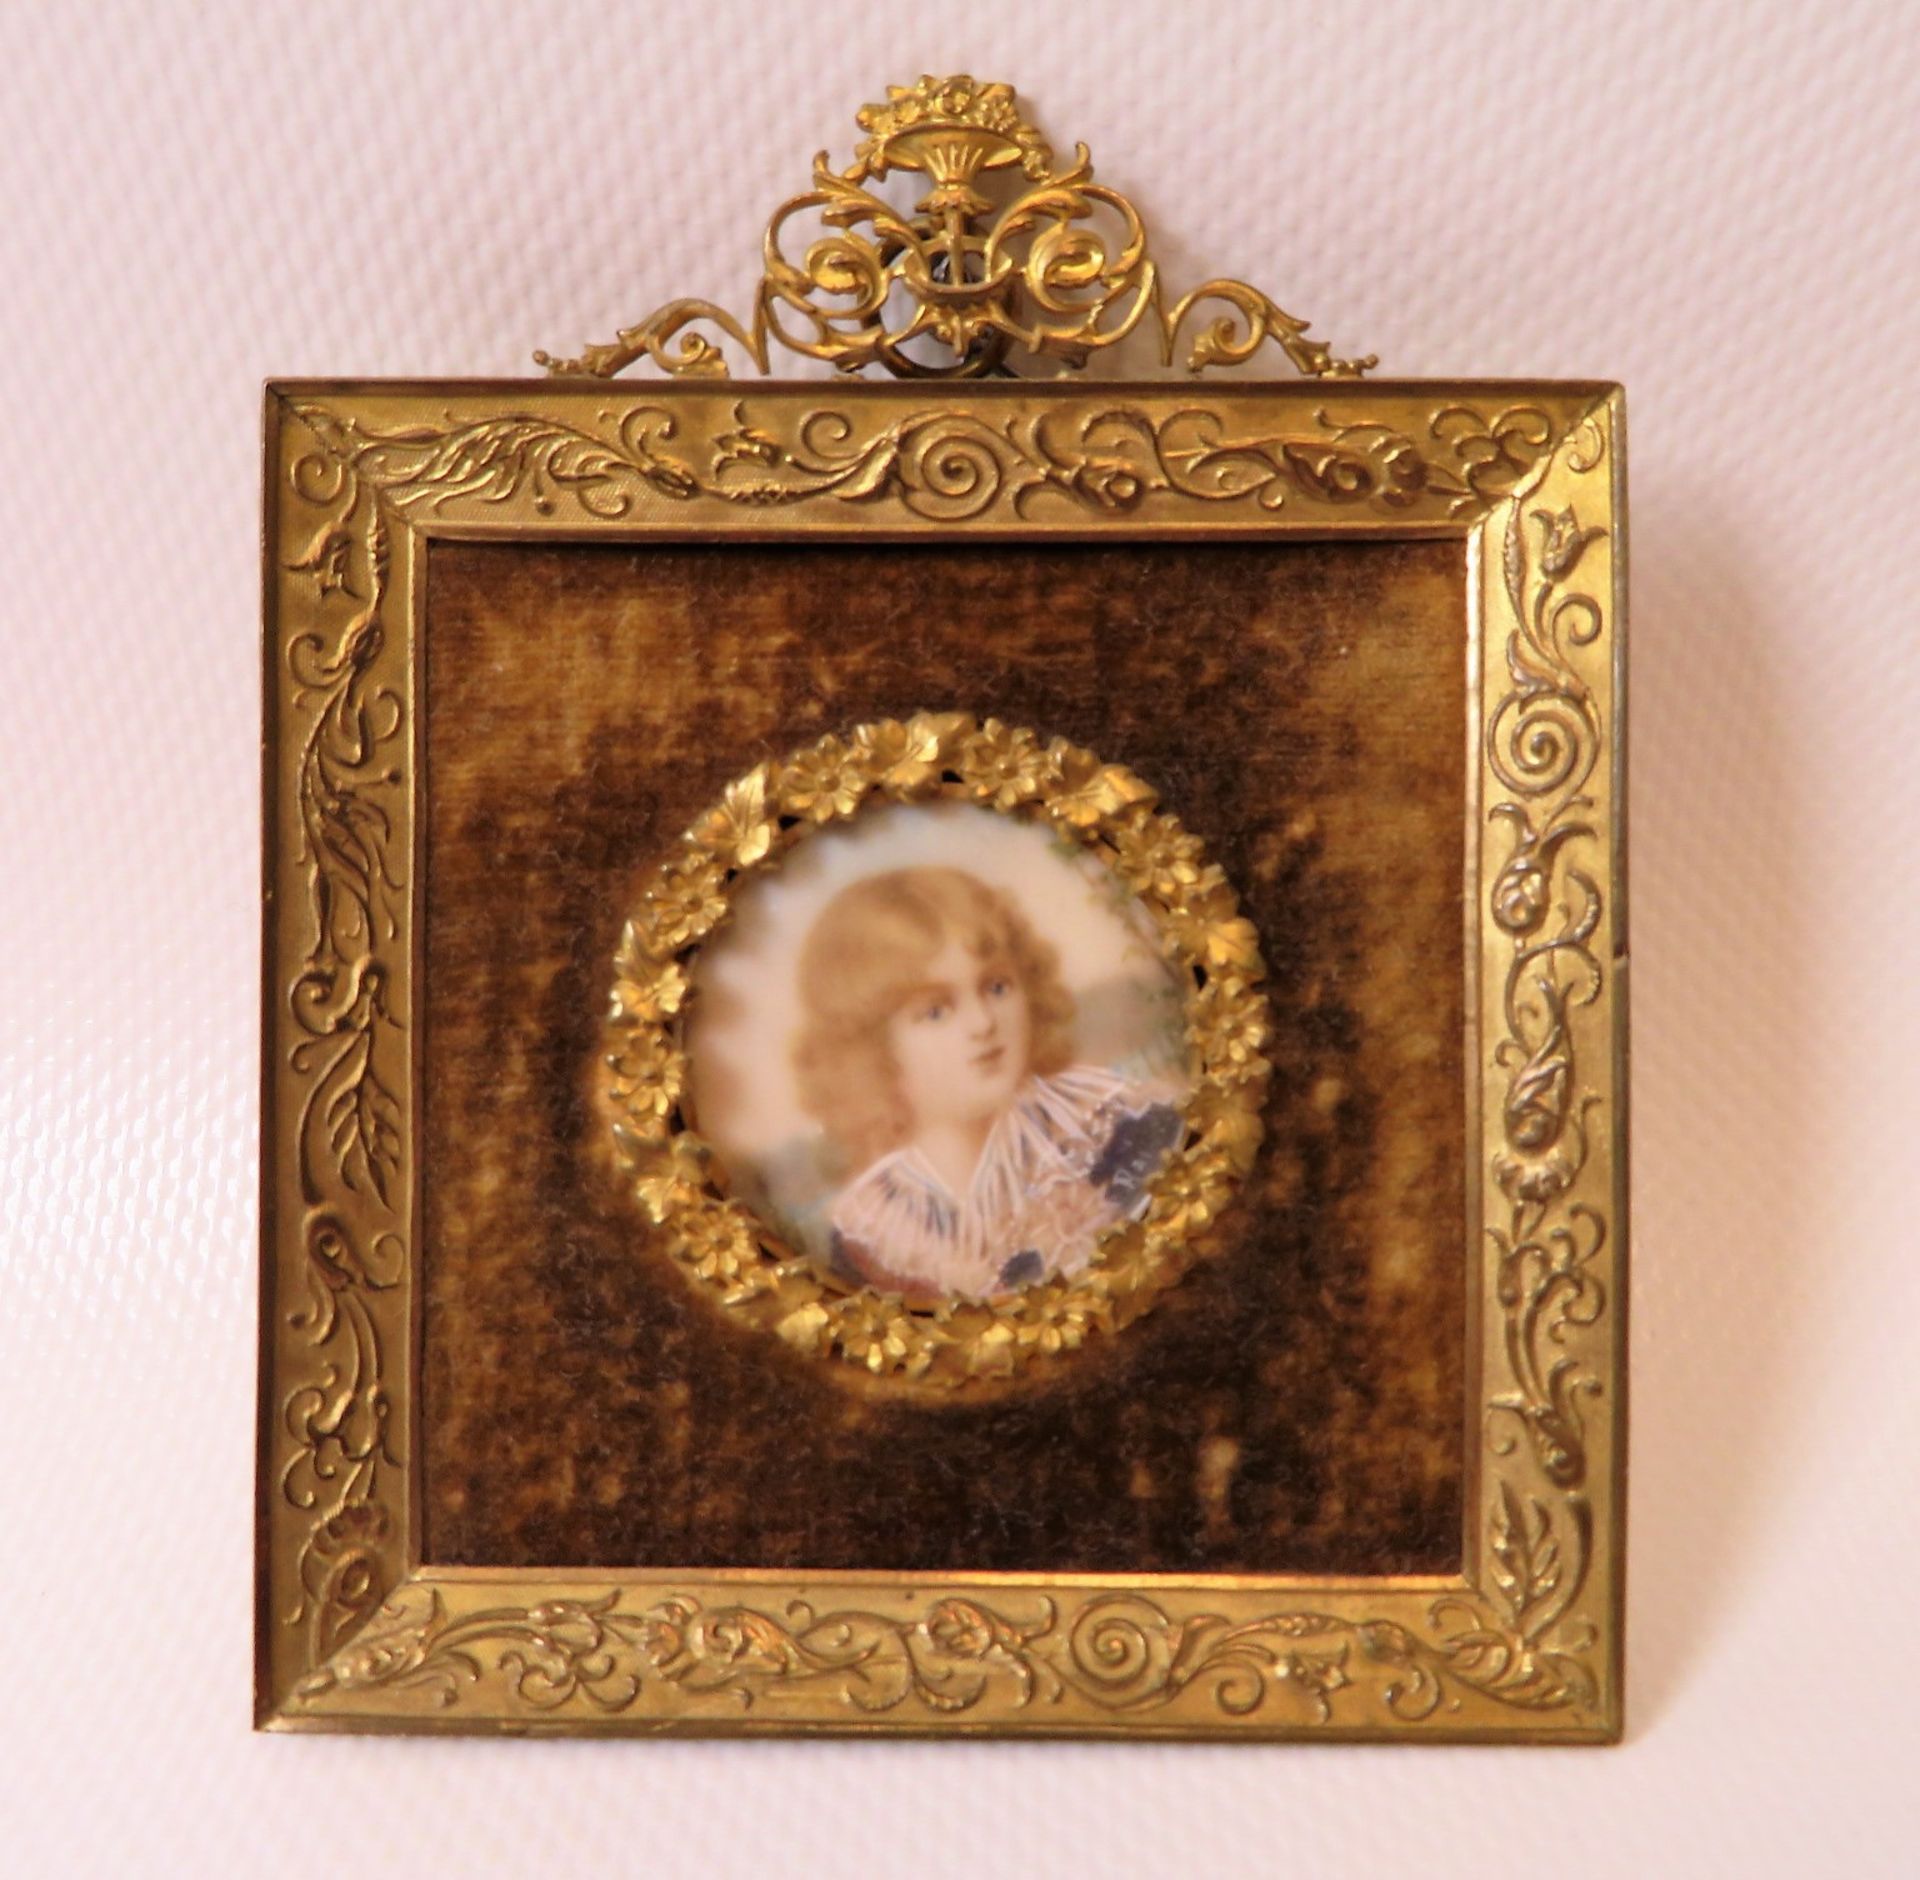 Elfenbeinminiatur, 19. Jahrhundert, "Porträt eines Jünglings", d 3,2 cm, R. [9,